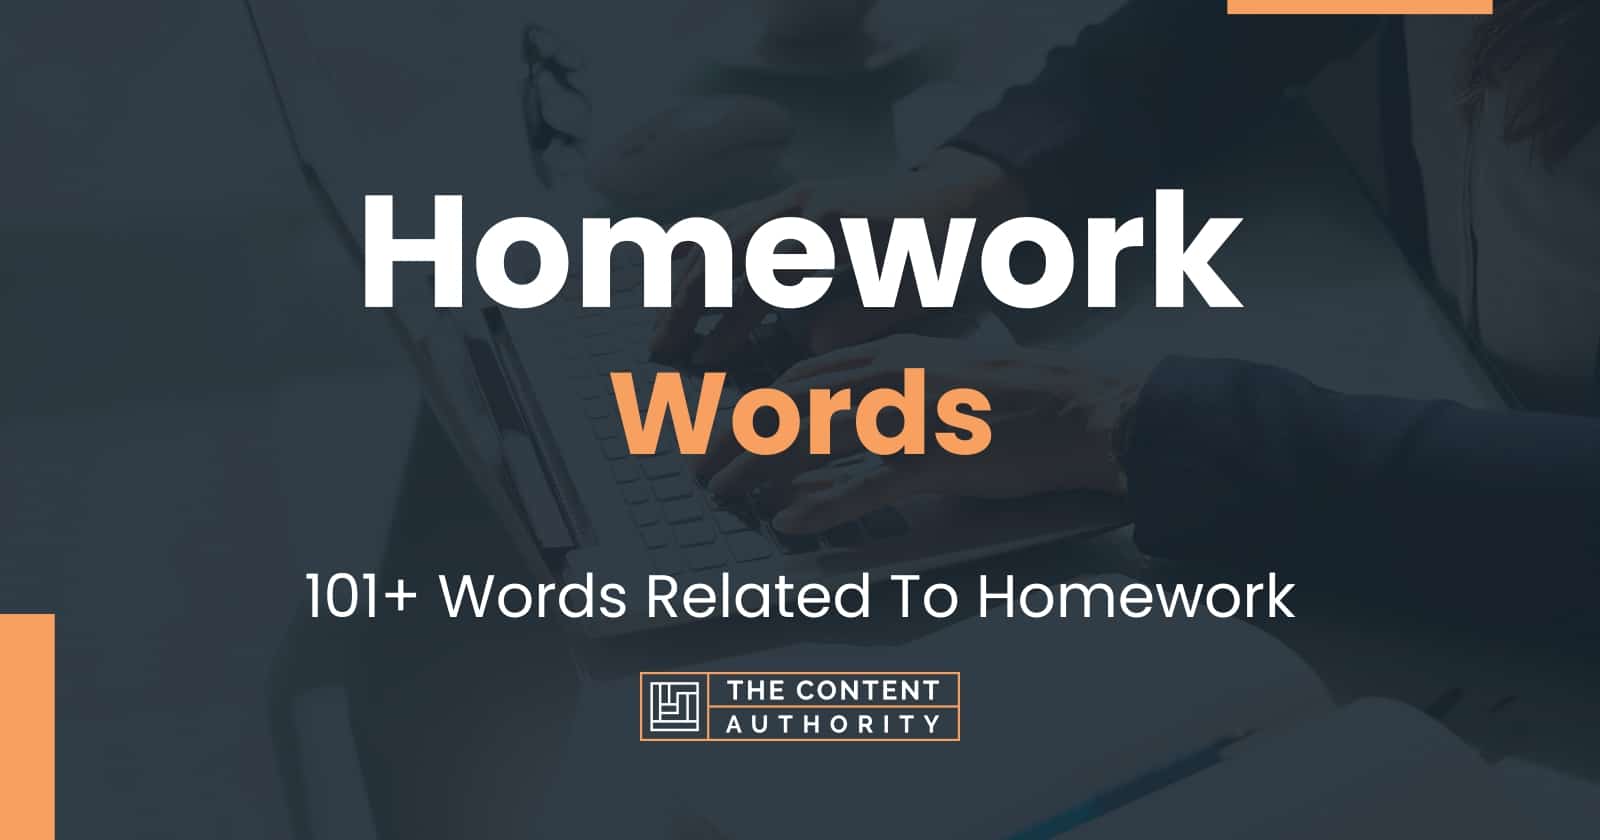 meaning of homework in simple words